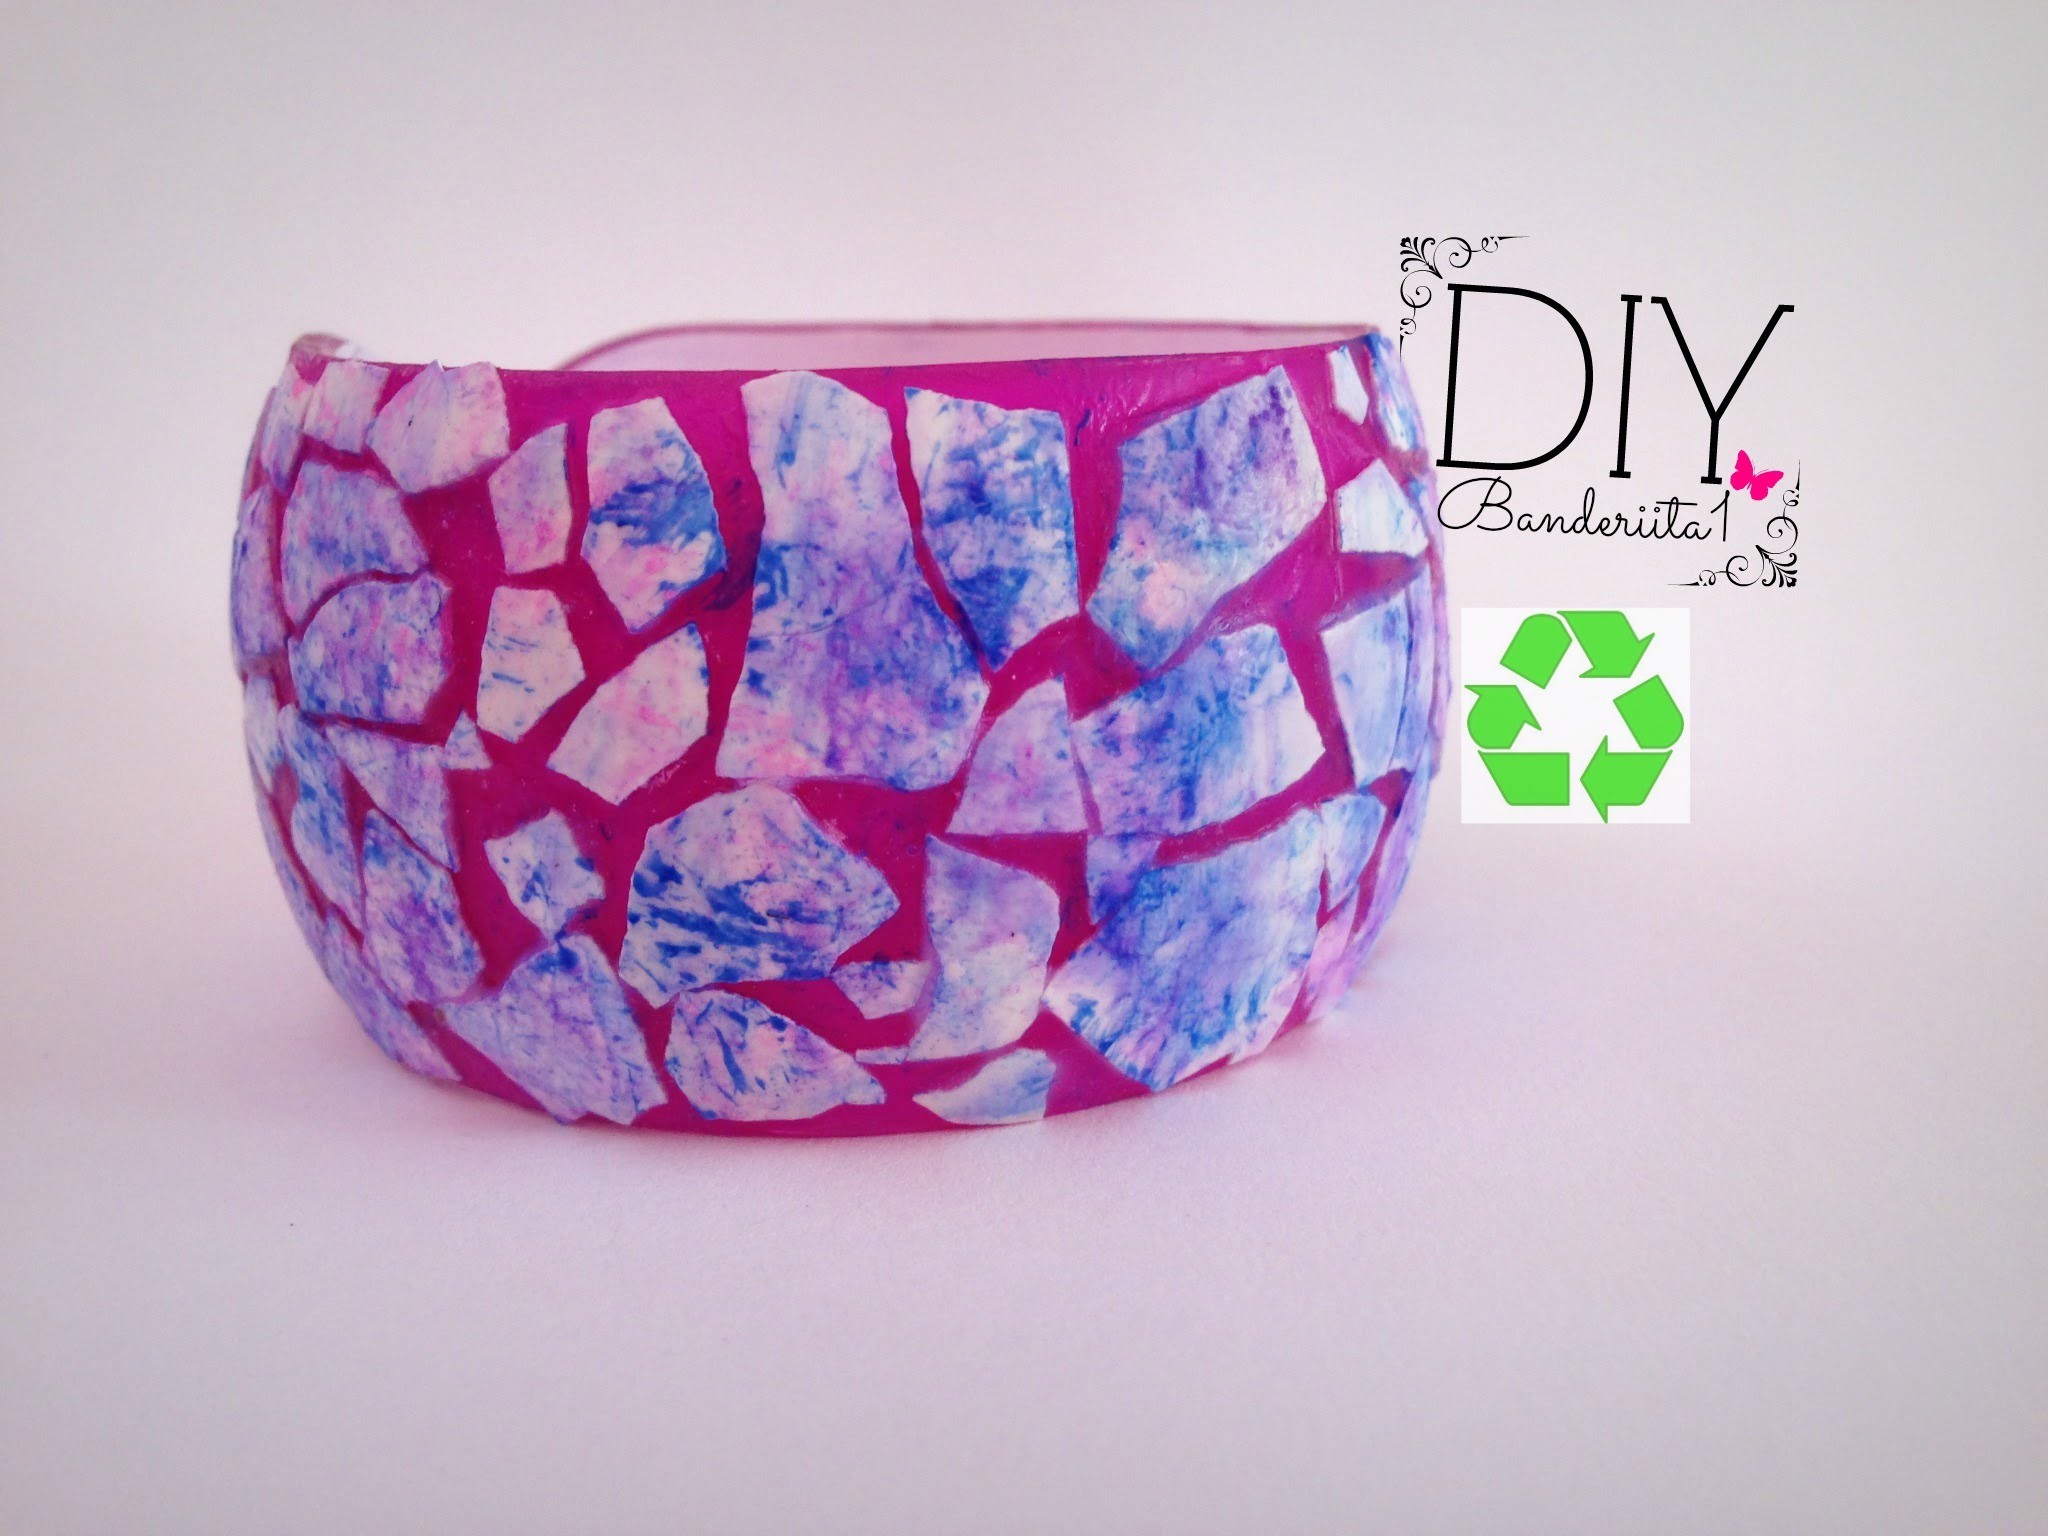 DIY Pulsera Reciclada. Recycled Bracelet Tutorial